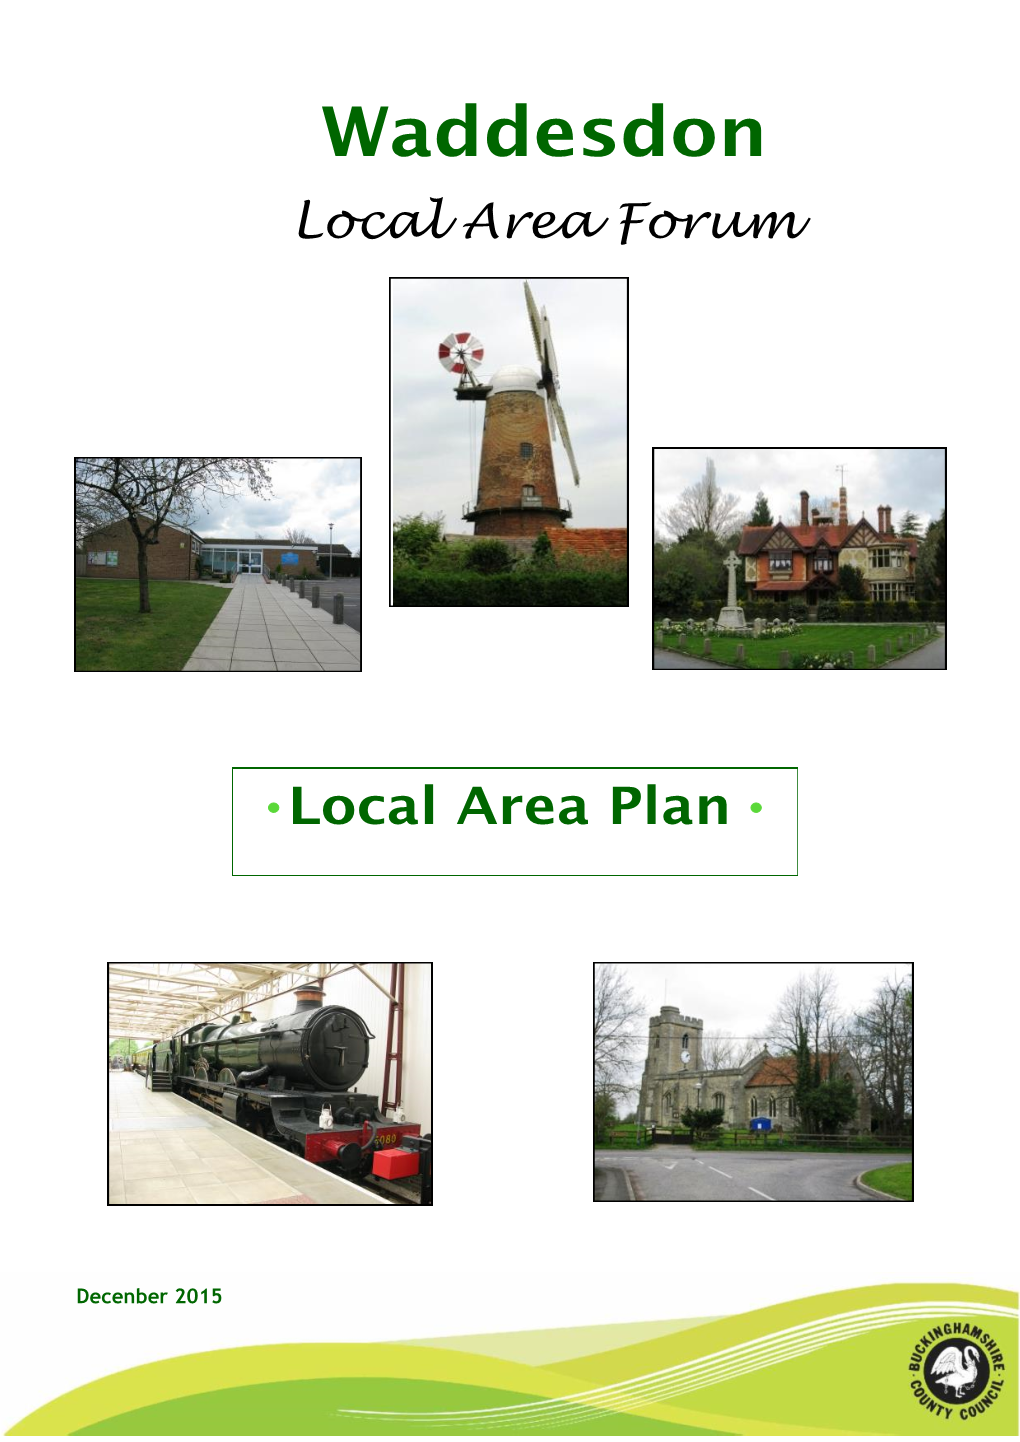 The Waddesdon Local Area Forum 3